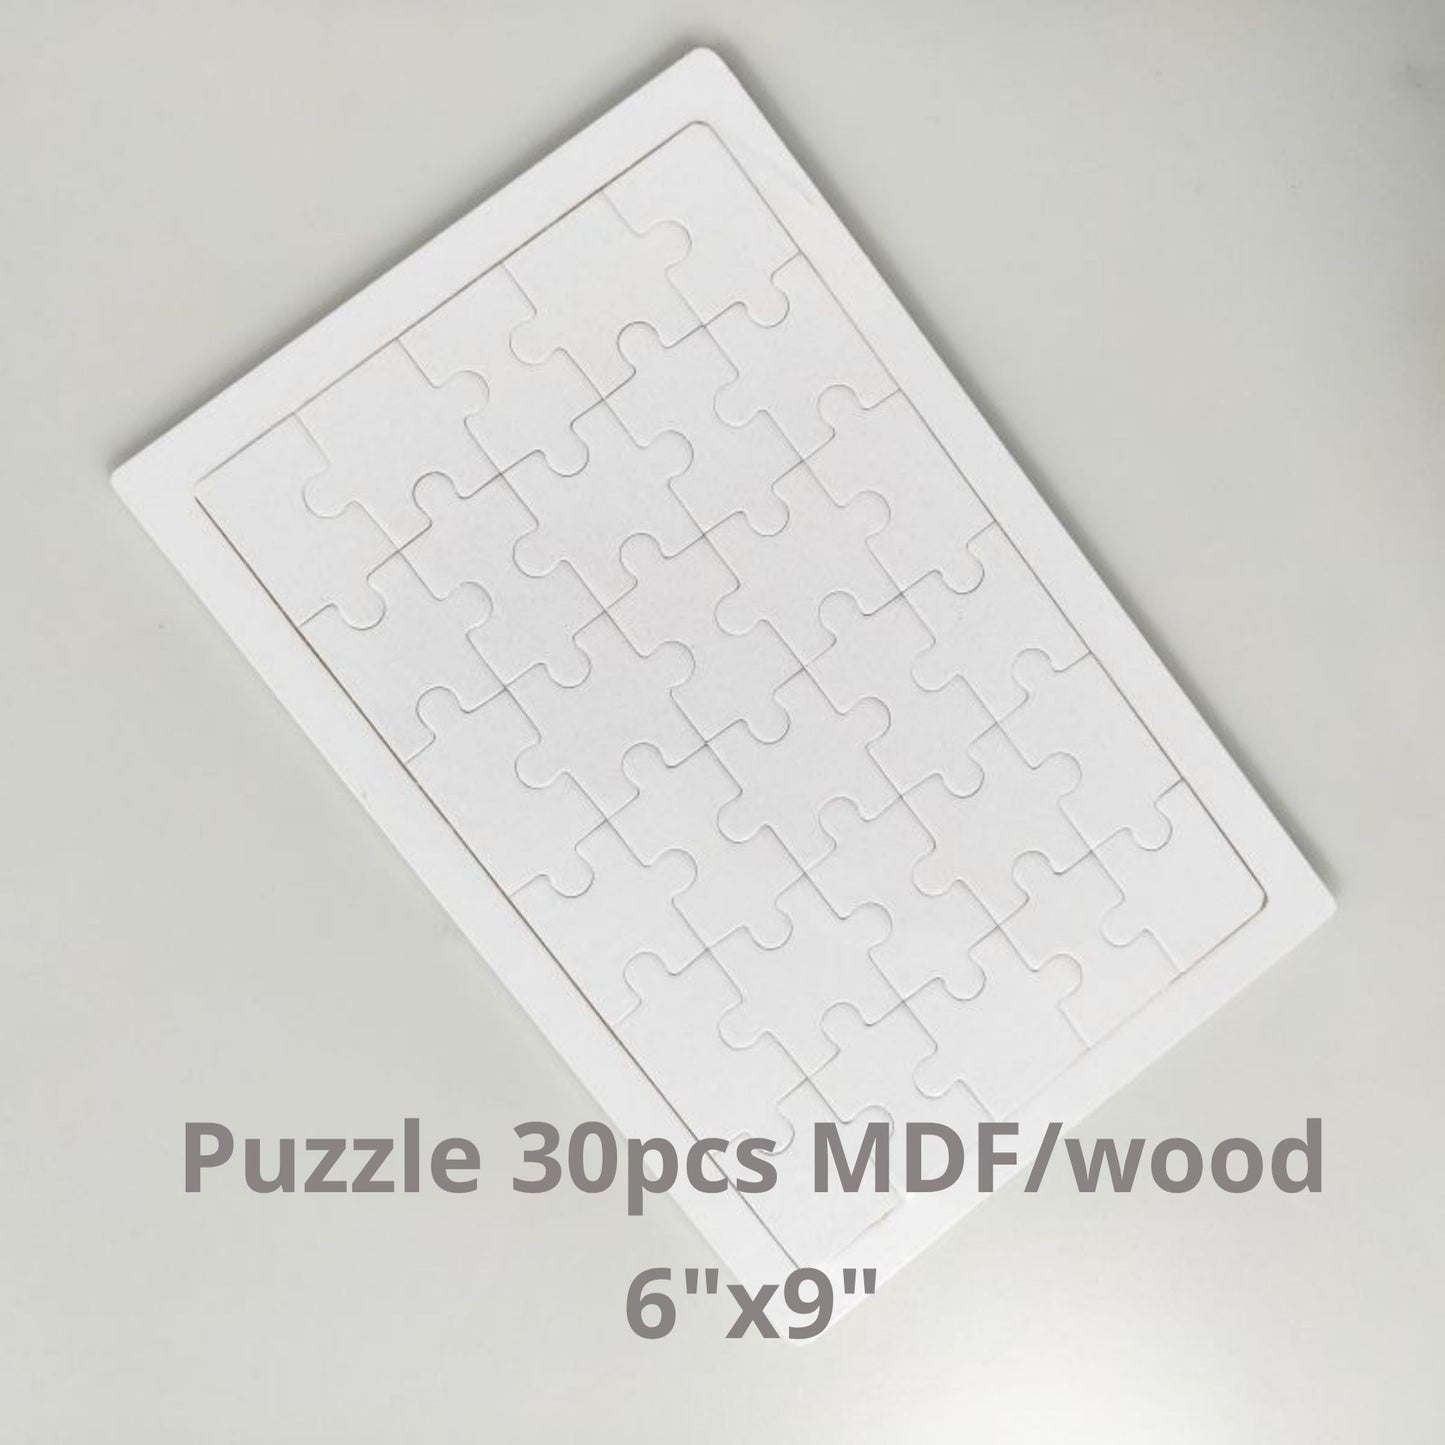 Puzzle Sublimation 30pcs MDF/wood – Granny's Sublimation Blanks RTS